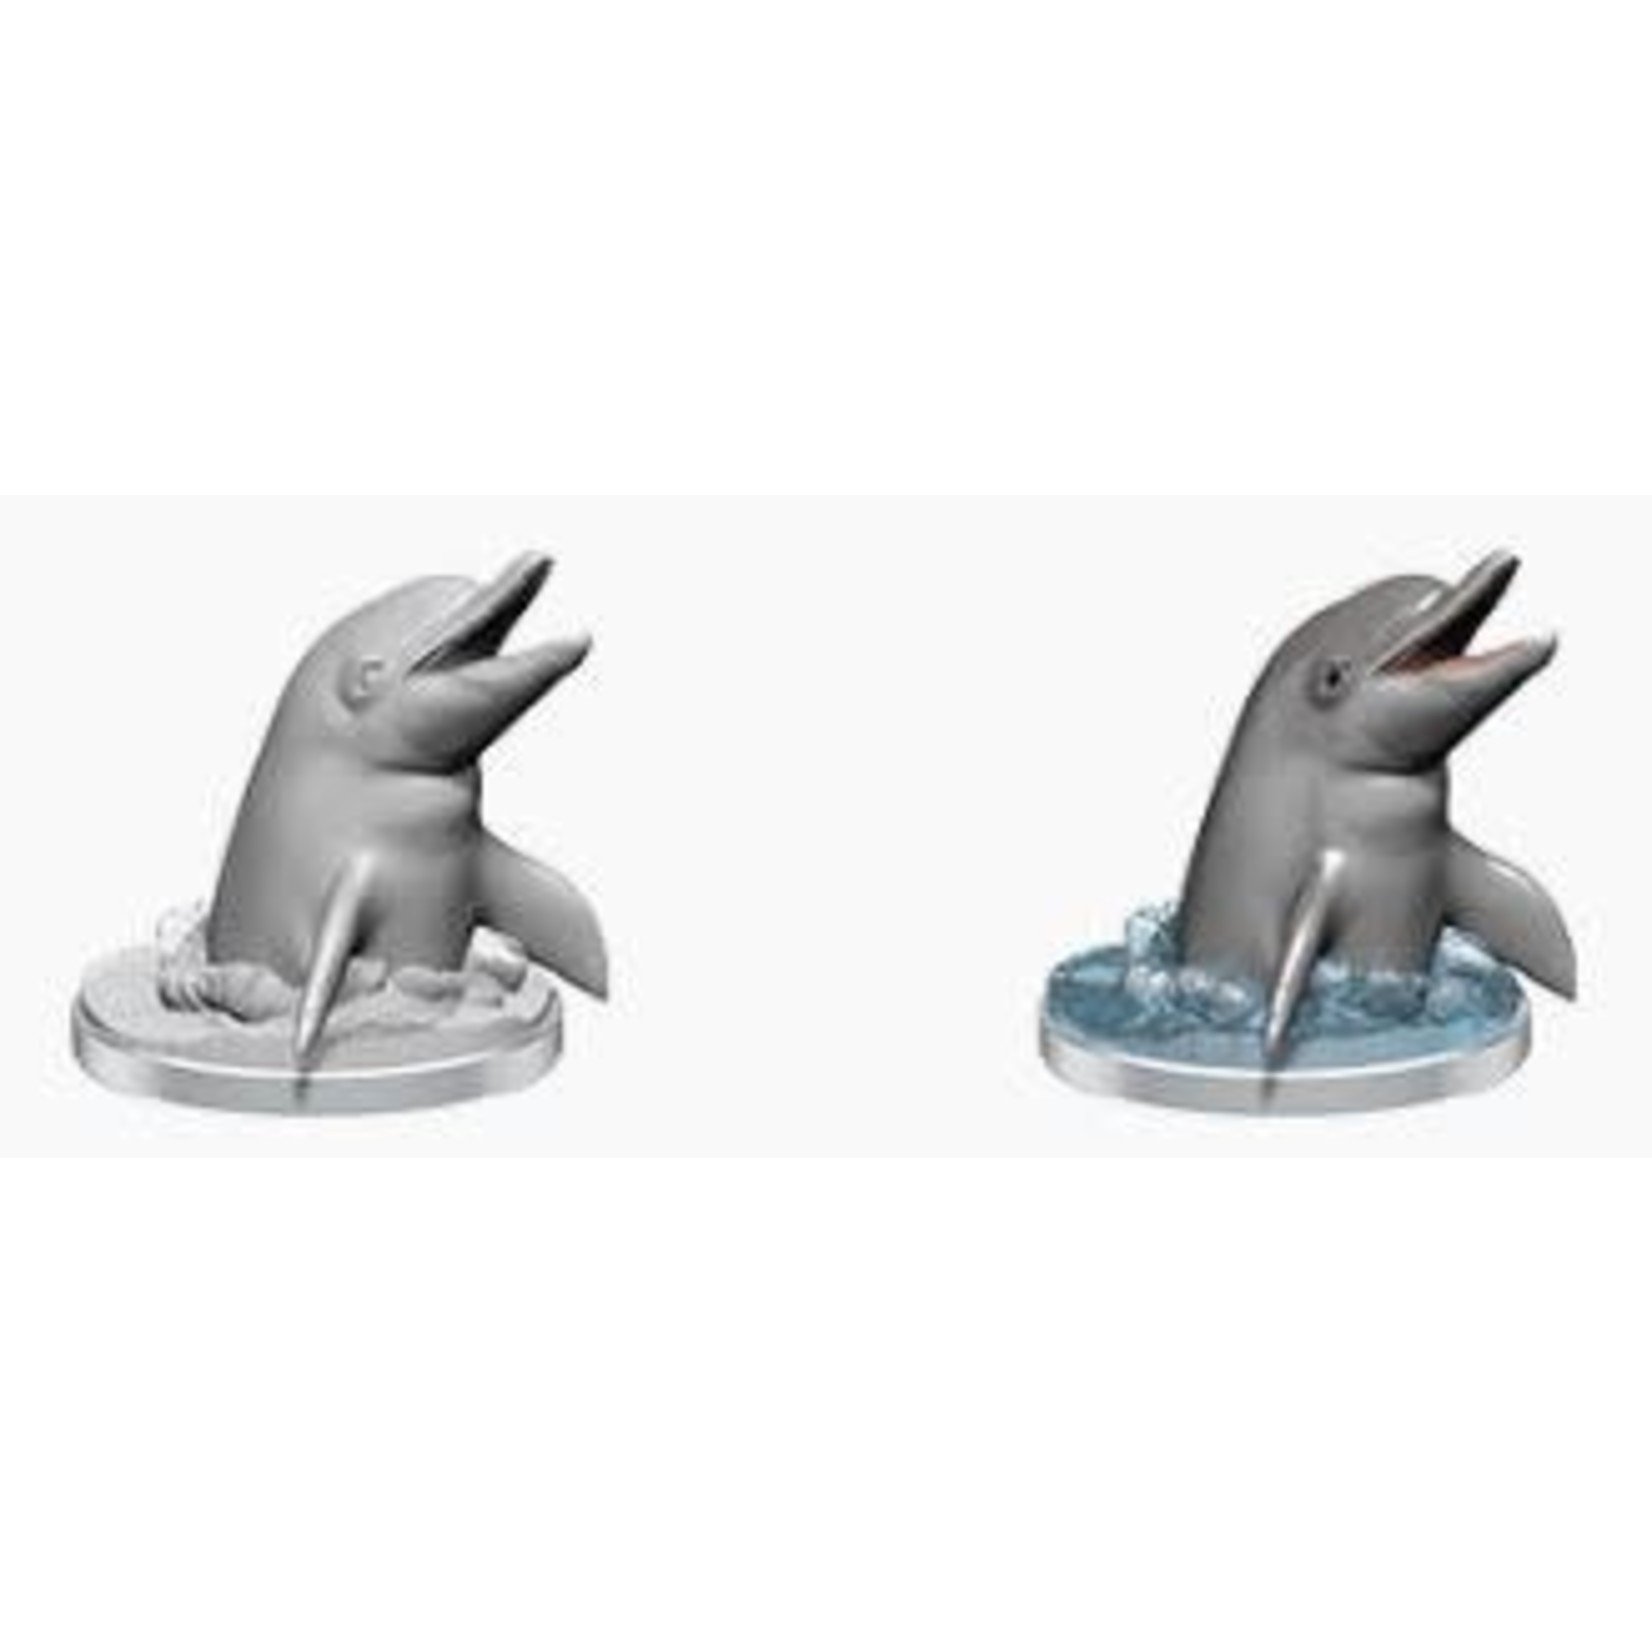 Wizkids DISCOACD Wizkids Deep Cuts: Dolphins (2) Set